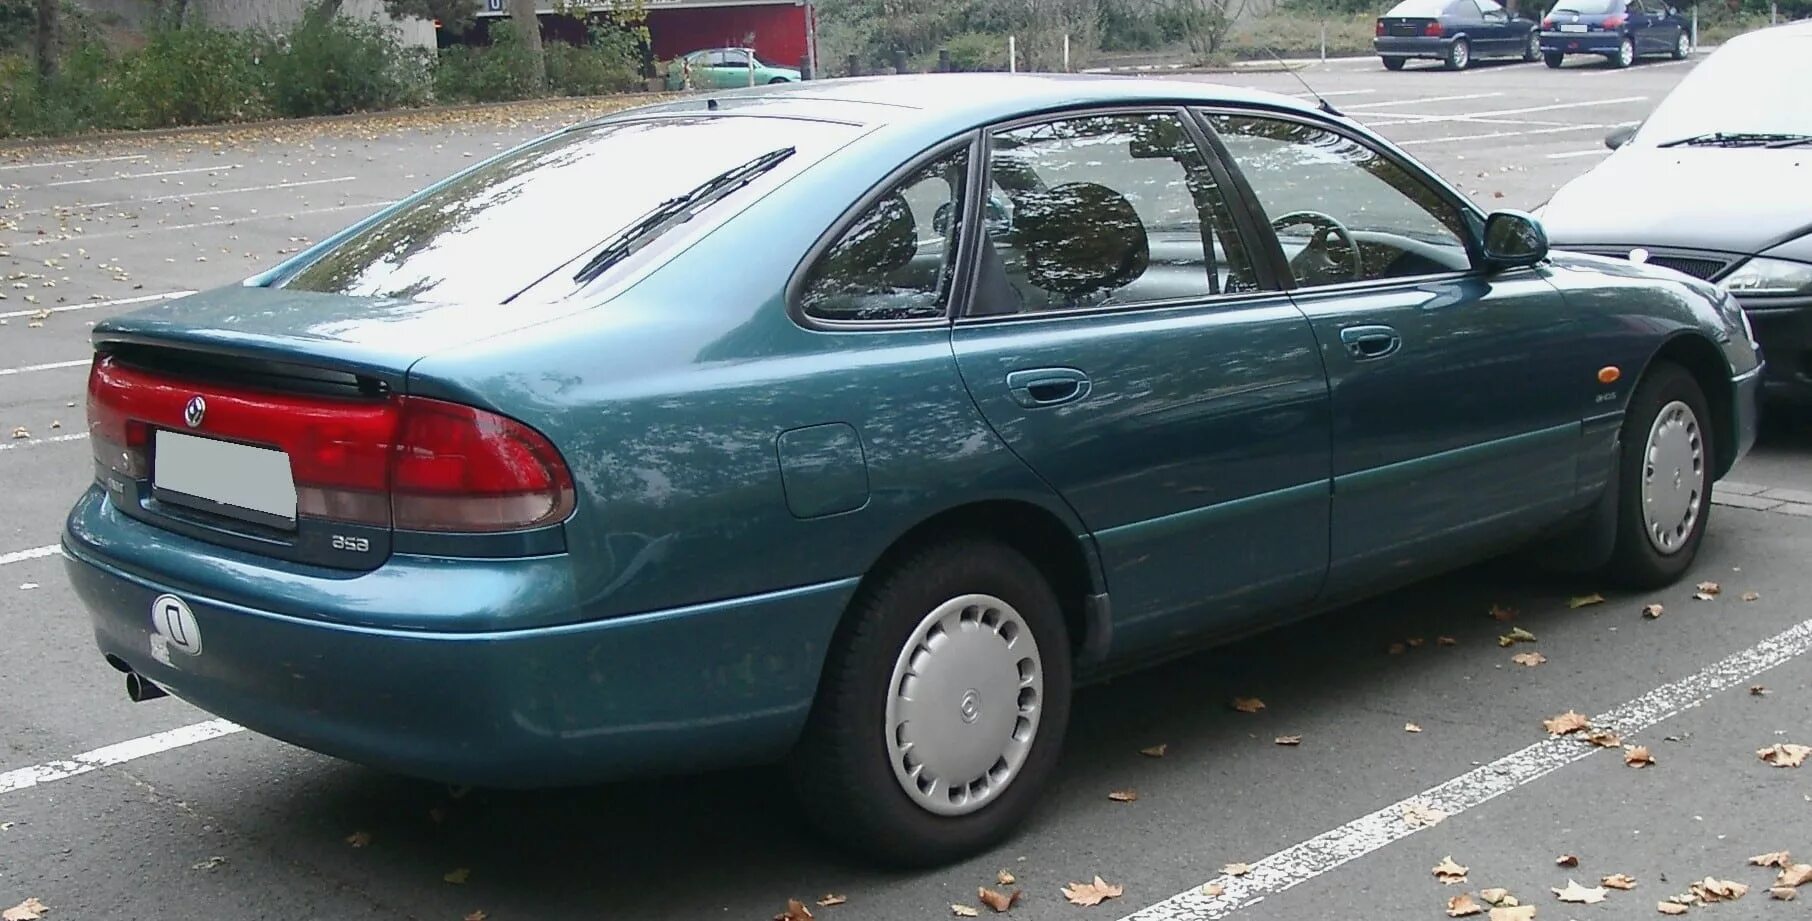 Mazda 626 ge 2.0. Mazda 626 хэтчбек 1992. Мазда 626 ge 1998. Мазда 626 ge 1997. Мазда 626 хэтчбек